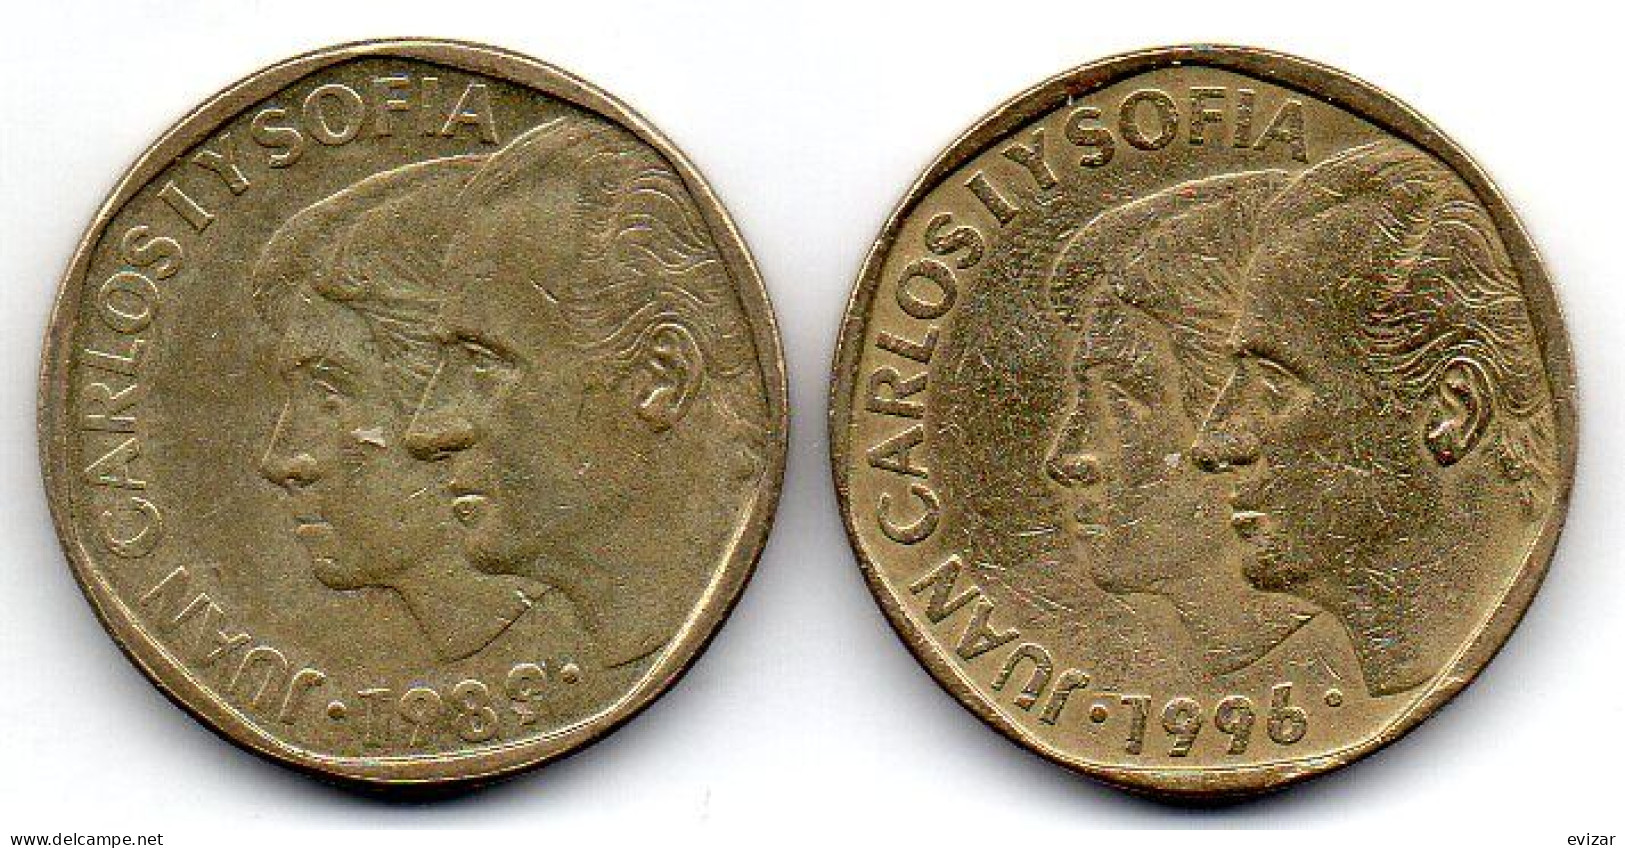 SPAIN, Set Of Two Coins 500 Pesetas, Copper-Aluminum-Nickel, Year 1989, 1996, KM # 831, 924 - 500 Pesetas